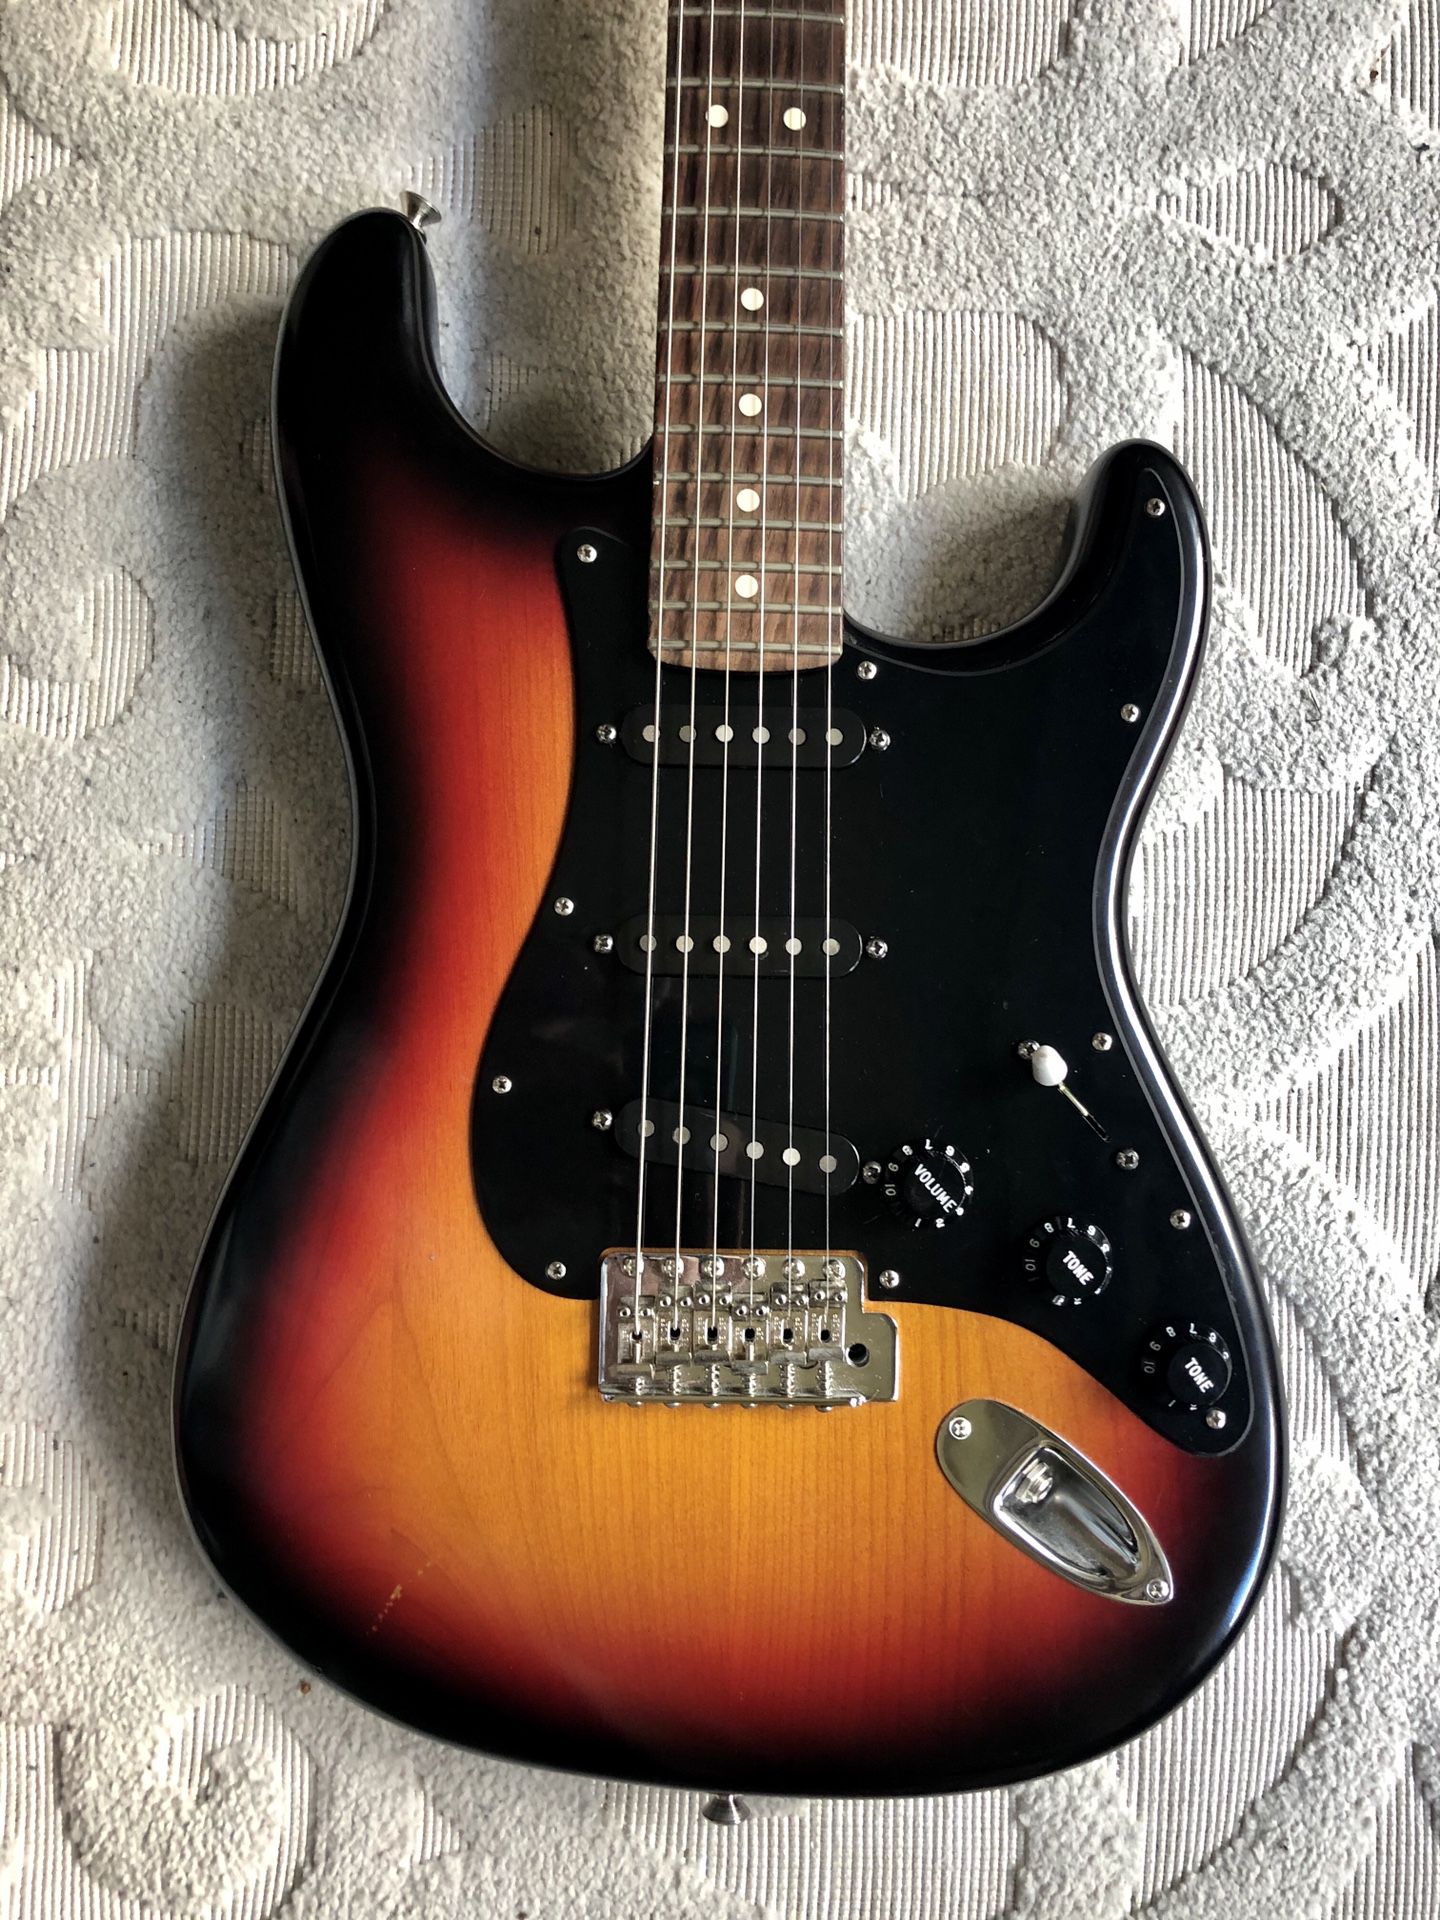 USA Fender Stratocaster Highway 1 Guitar